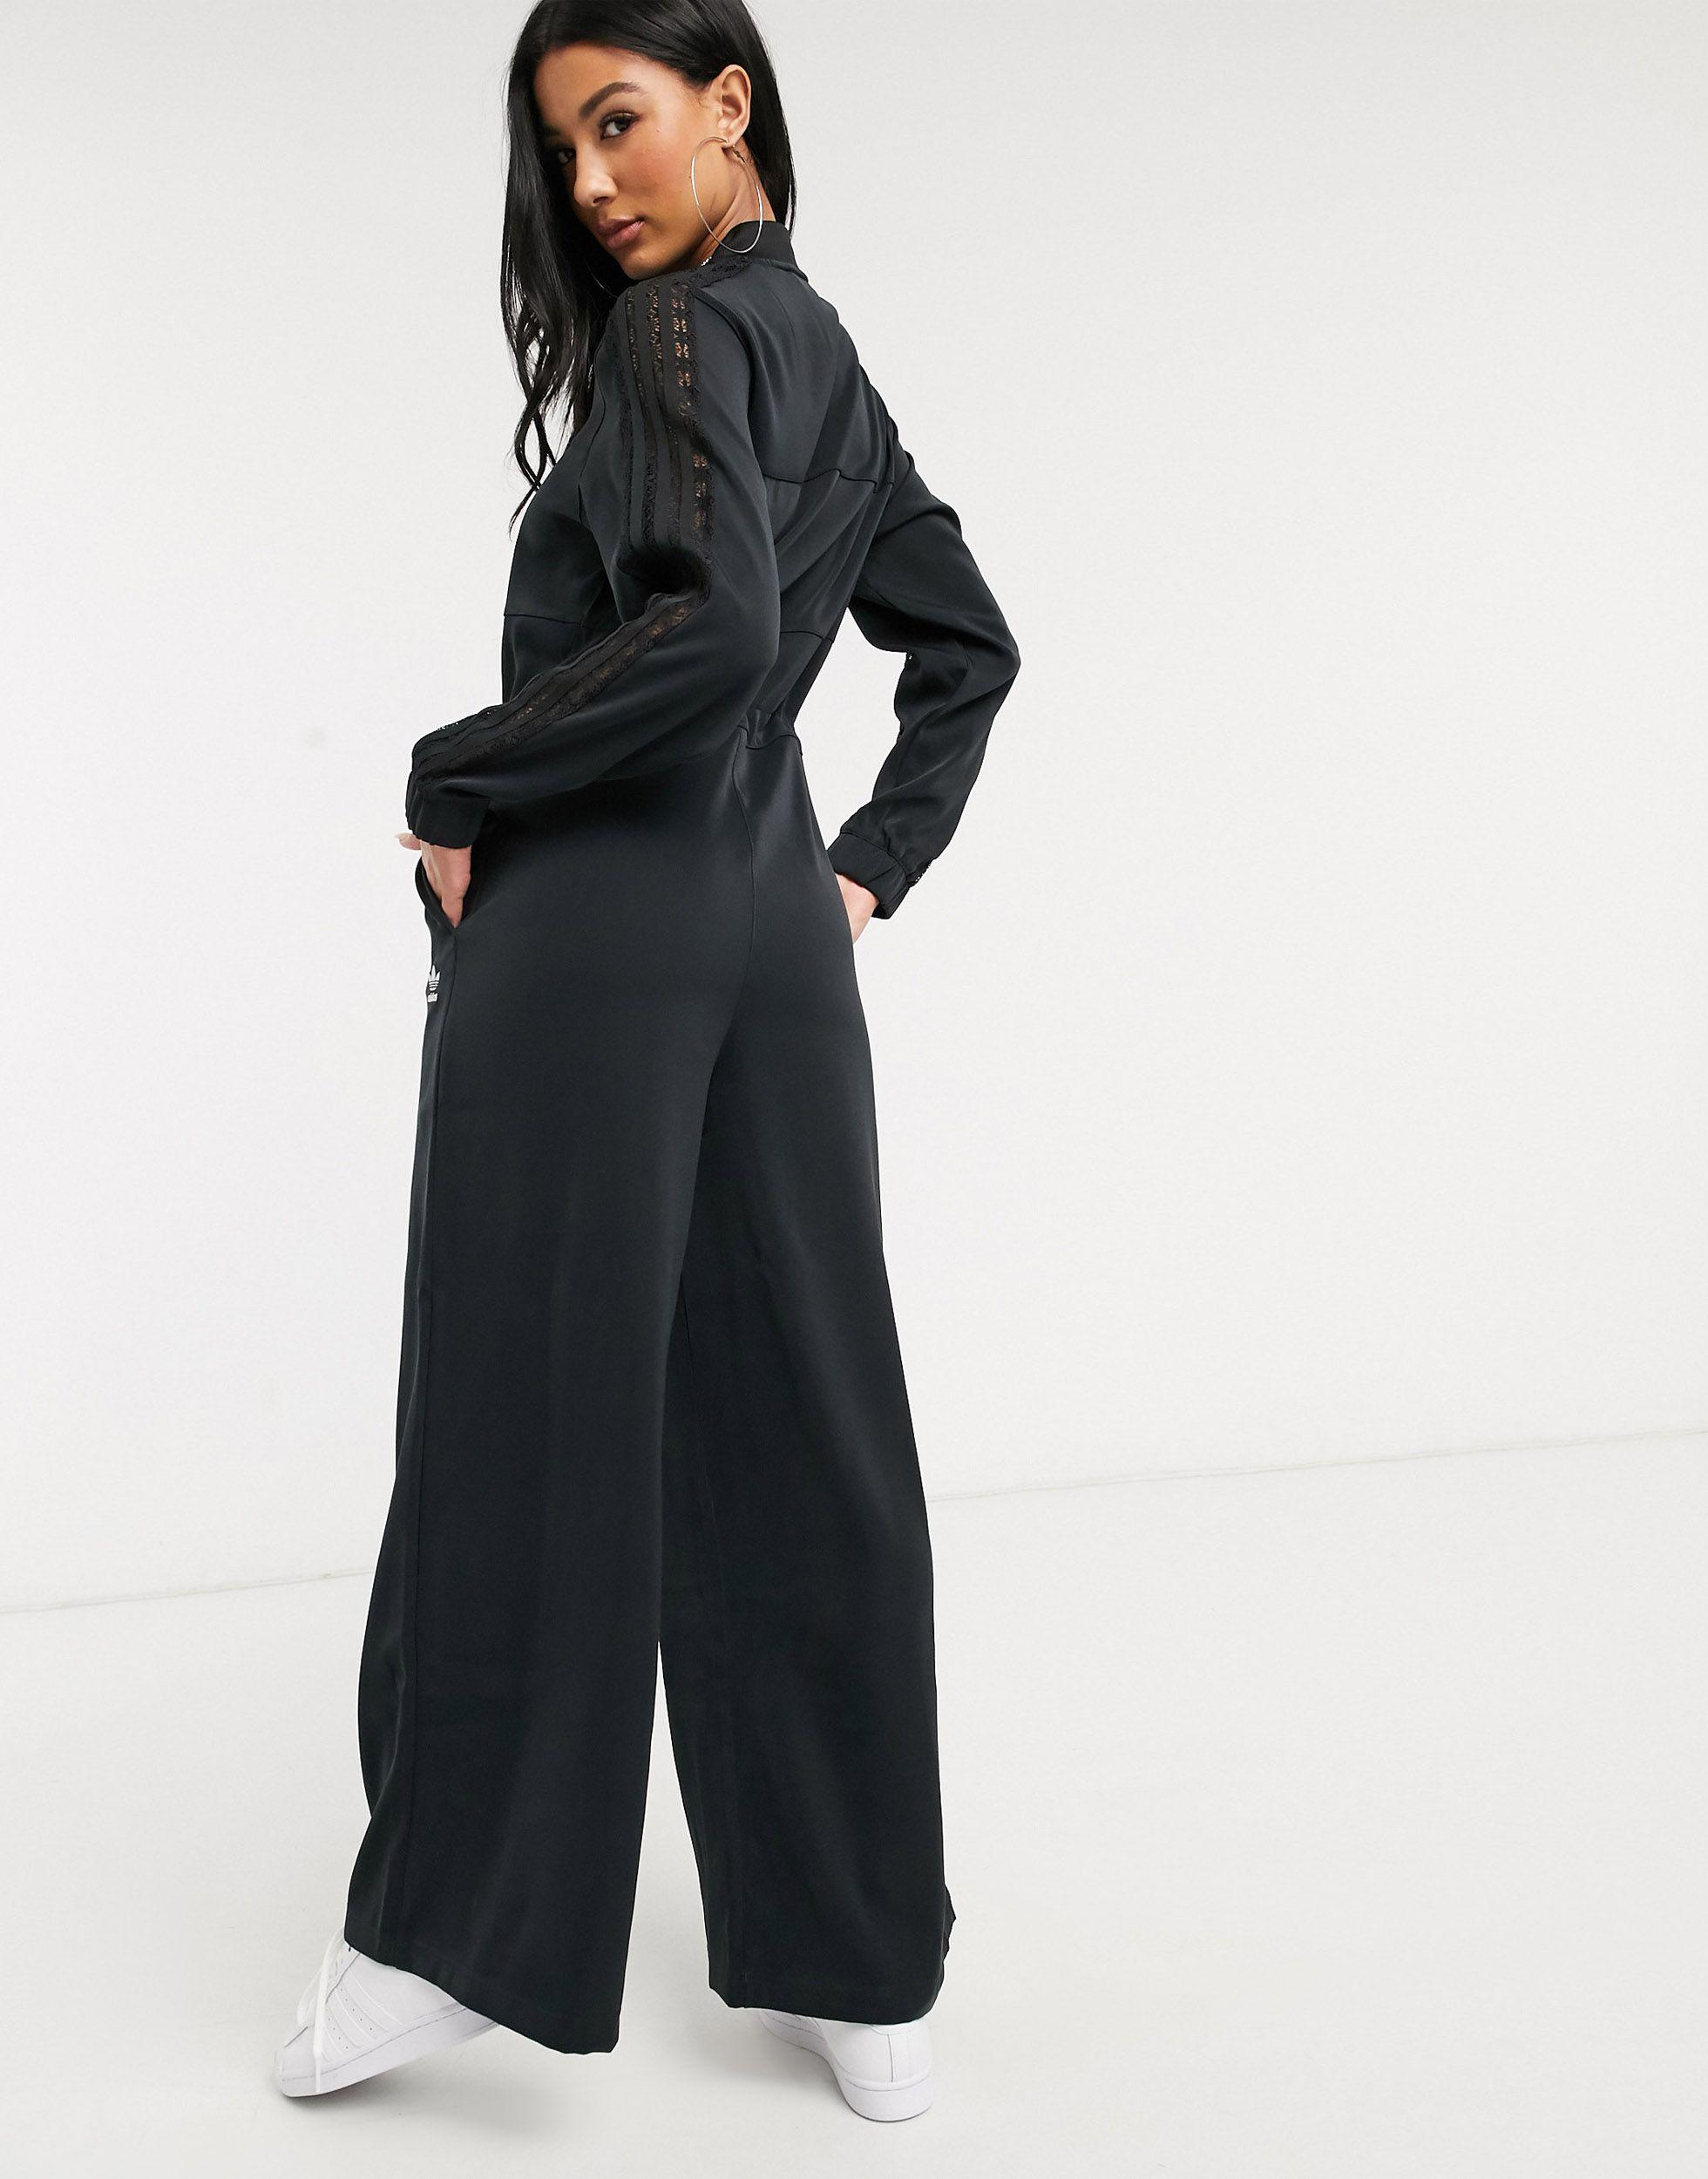 adidas Originals Synthetic Bellista Lace Insert Jumpsuit in Black - Lyst